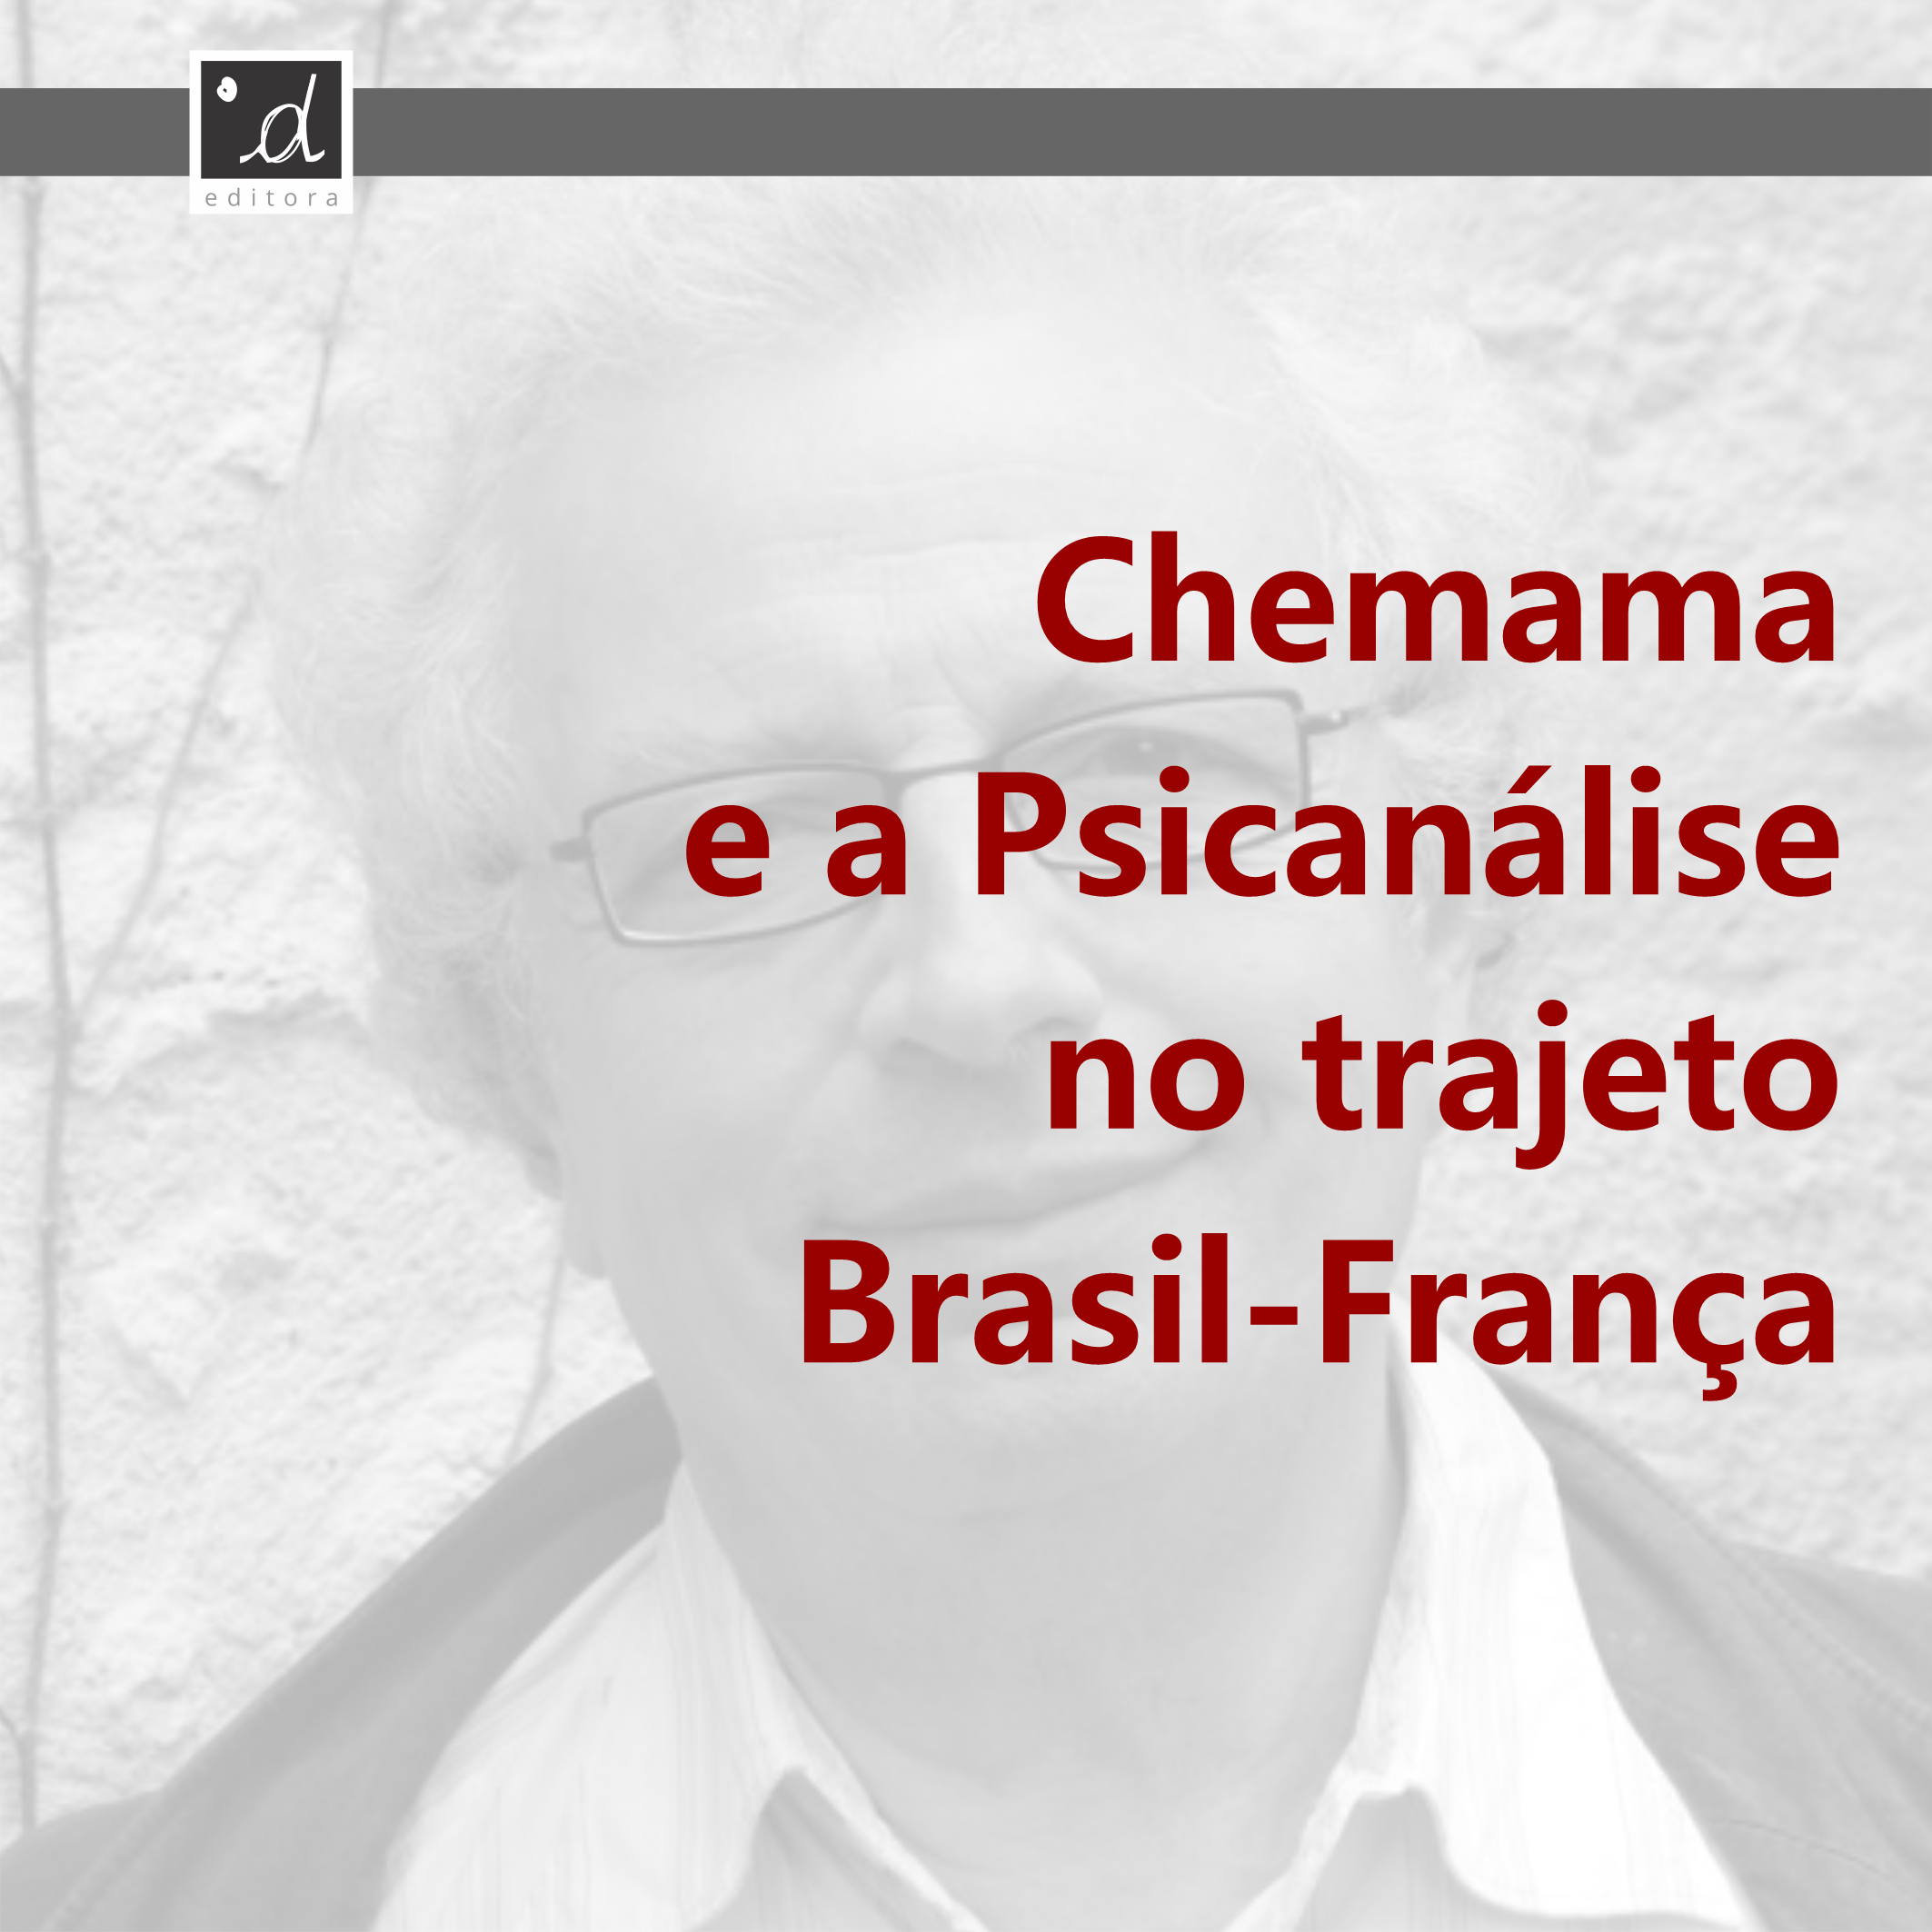 Roland Chemama no trajeto Brasil e França